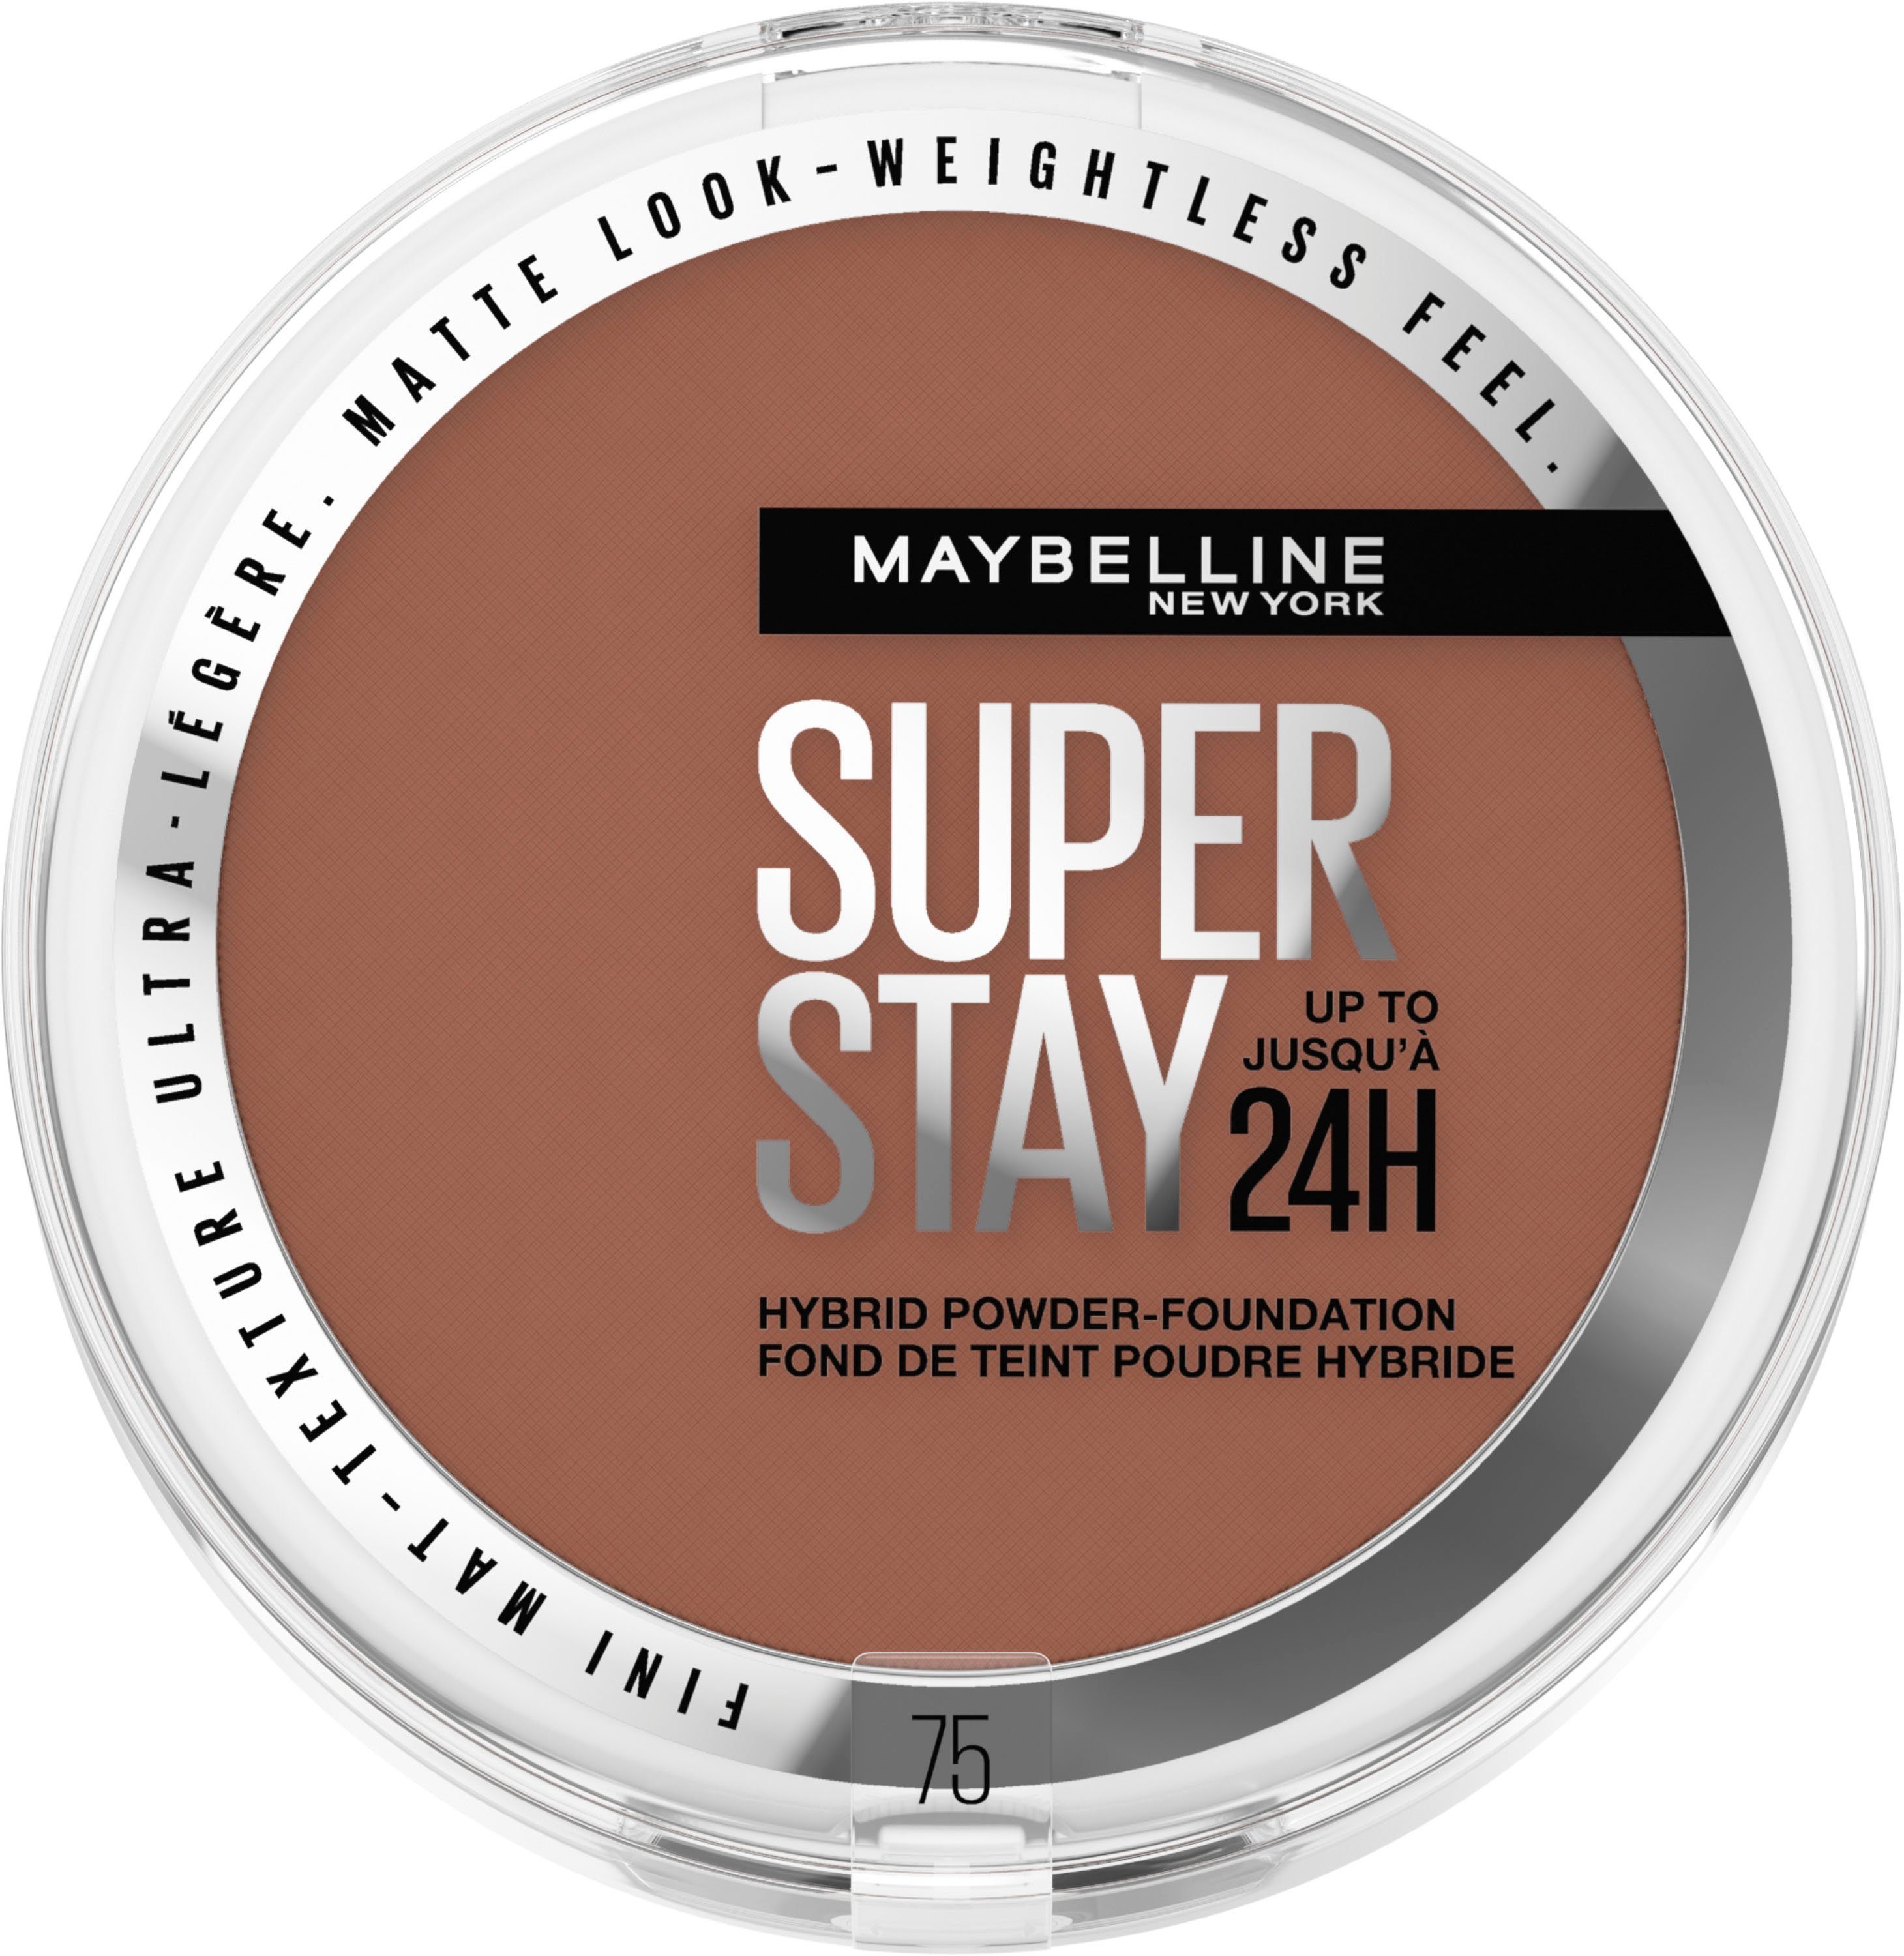 Make-Up MAYBELLINE Puder NEW Foundation York Super New Maybelline Hybrides YORK Stay